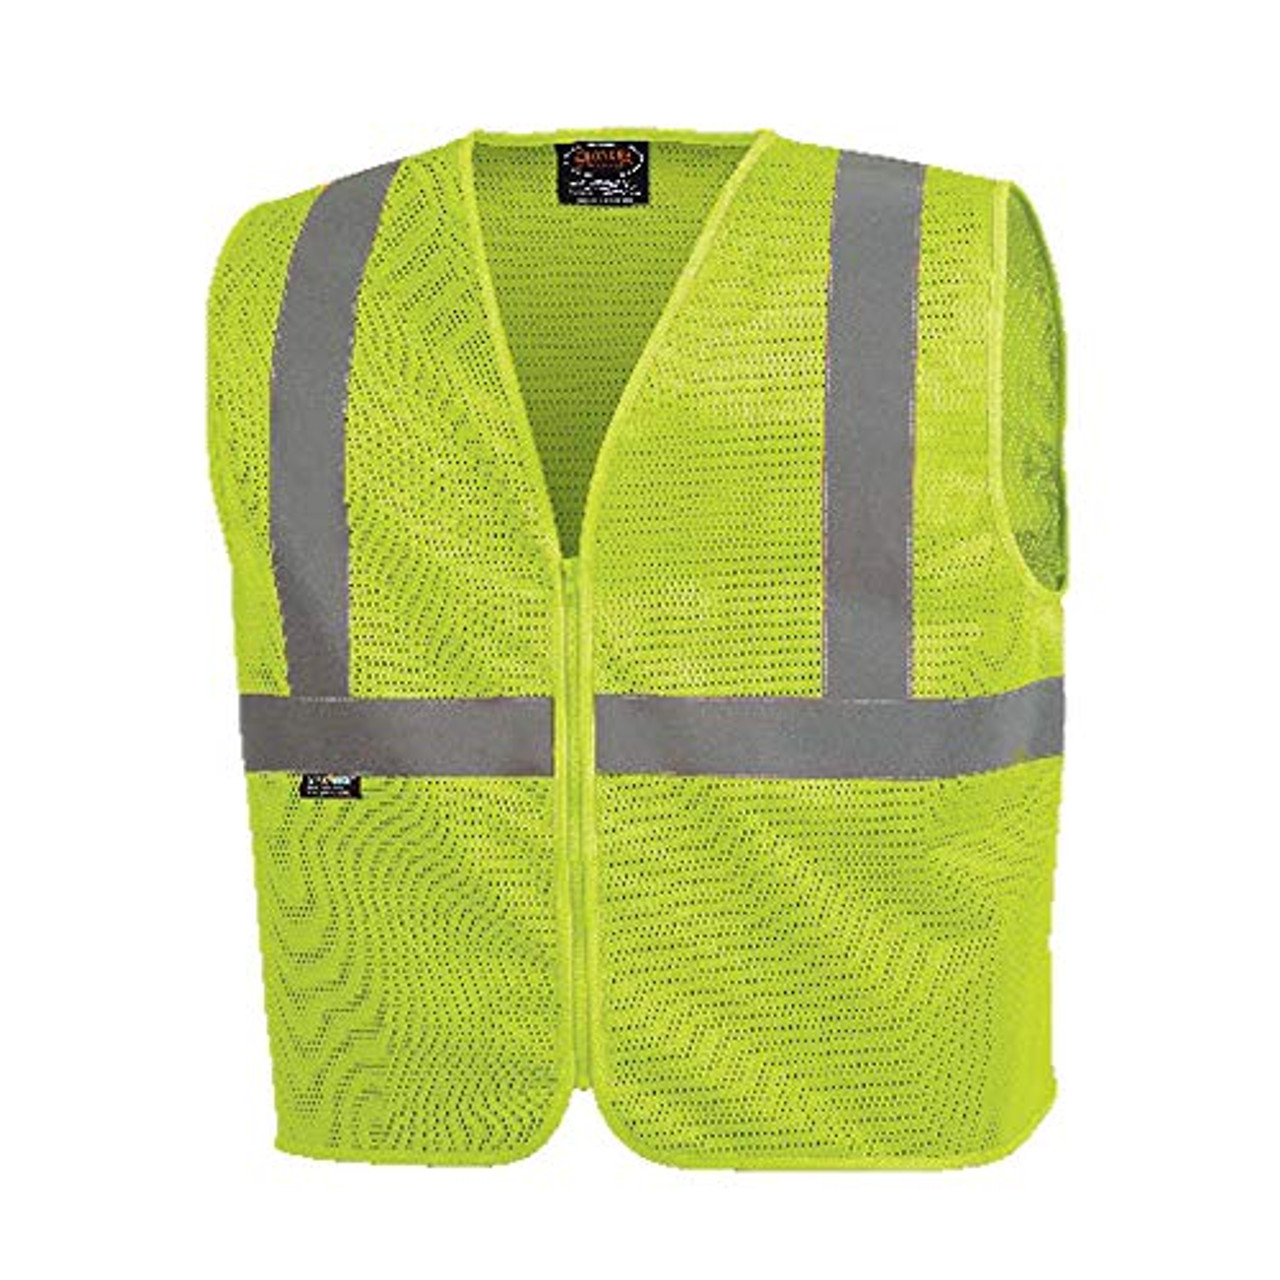 Men's High Visibility Reflective Safety Vest